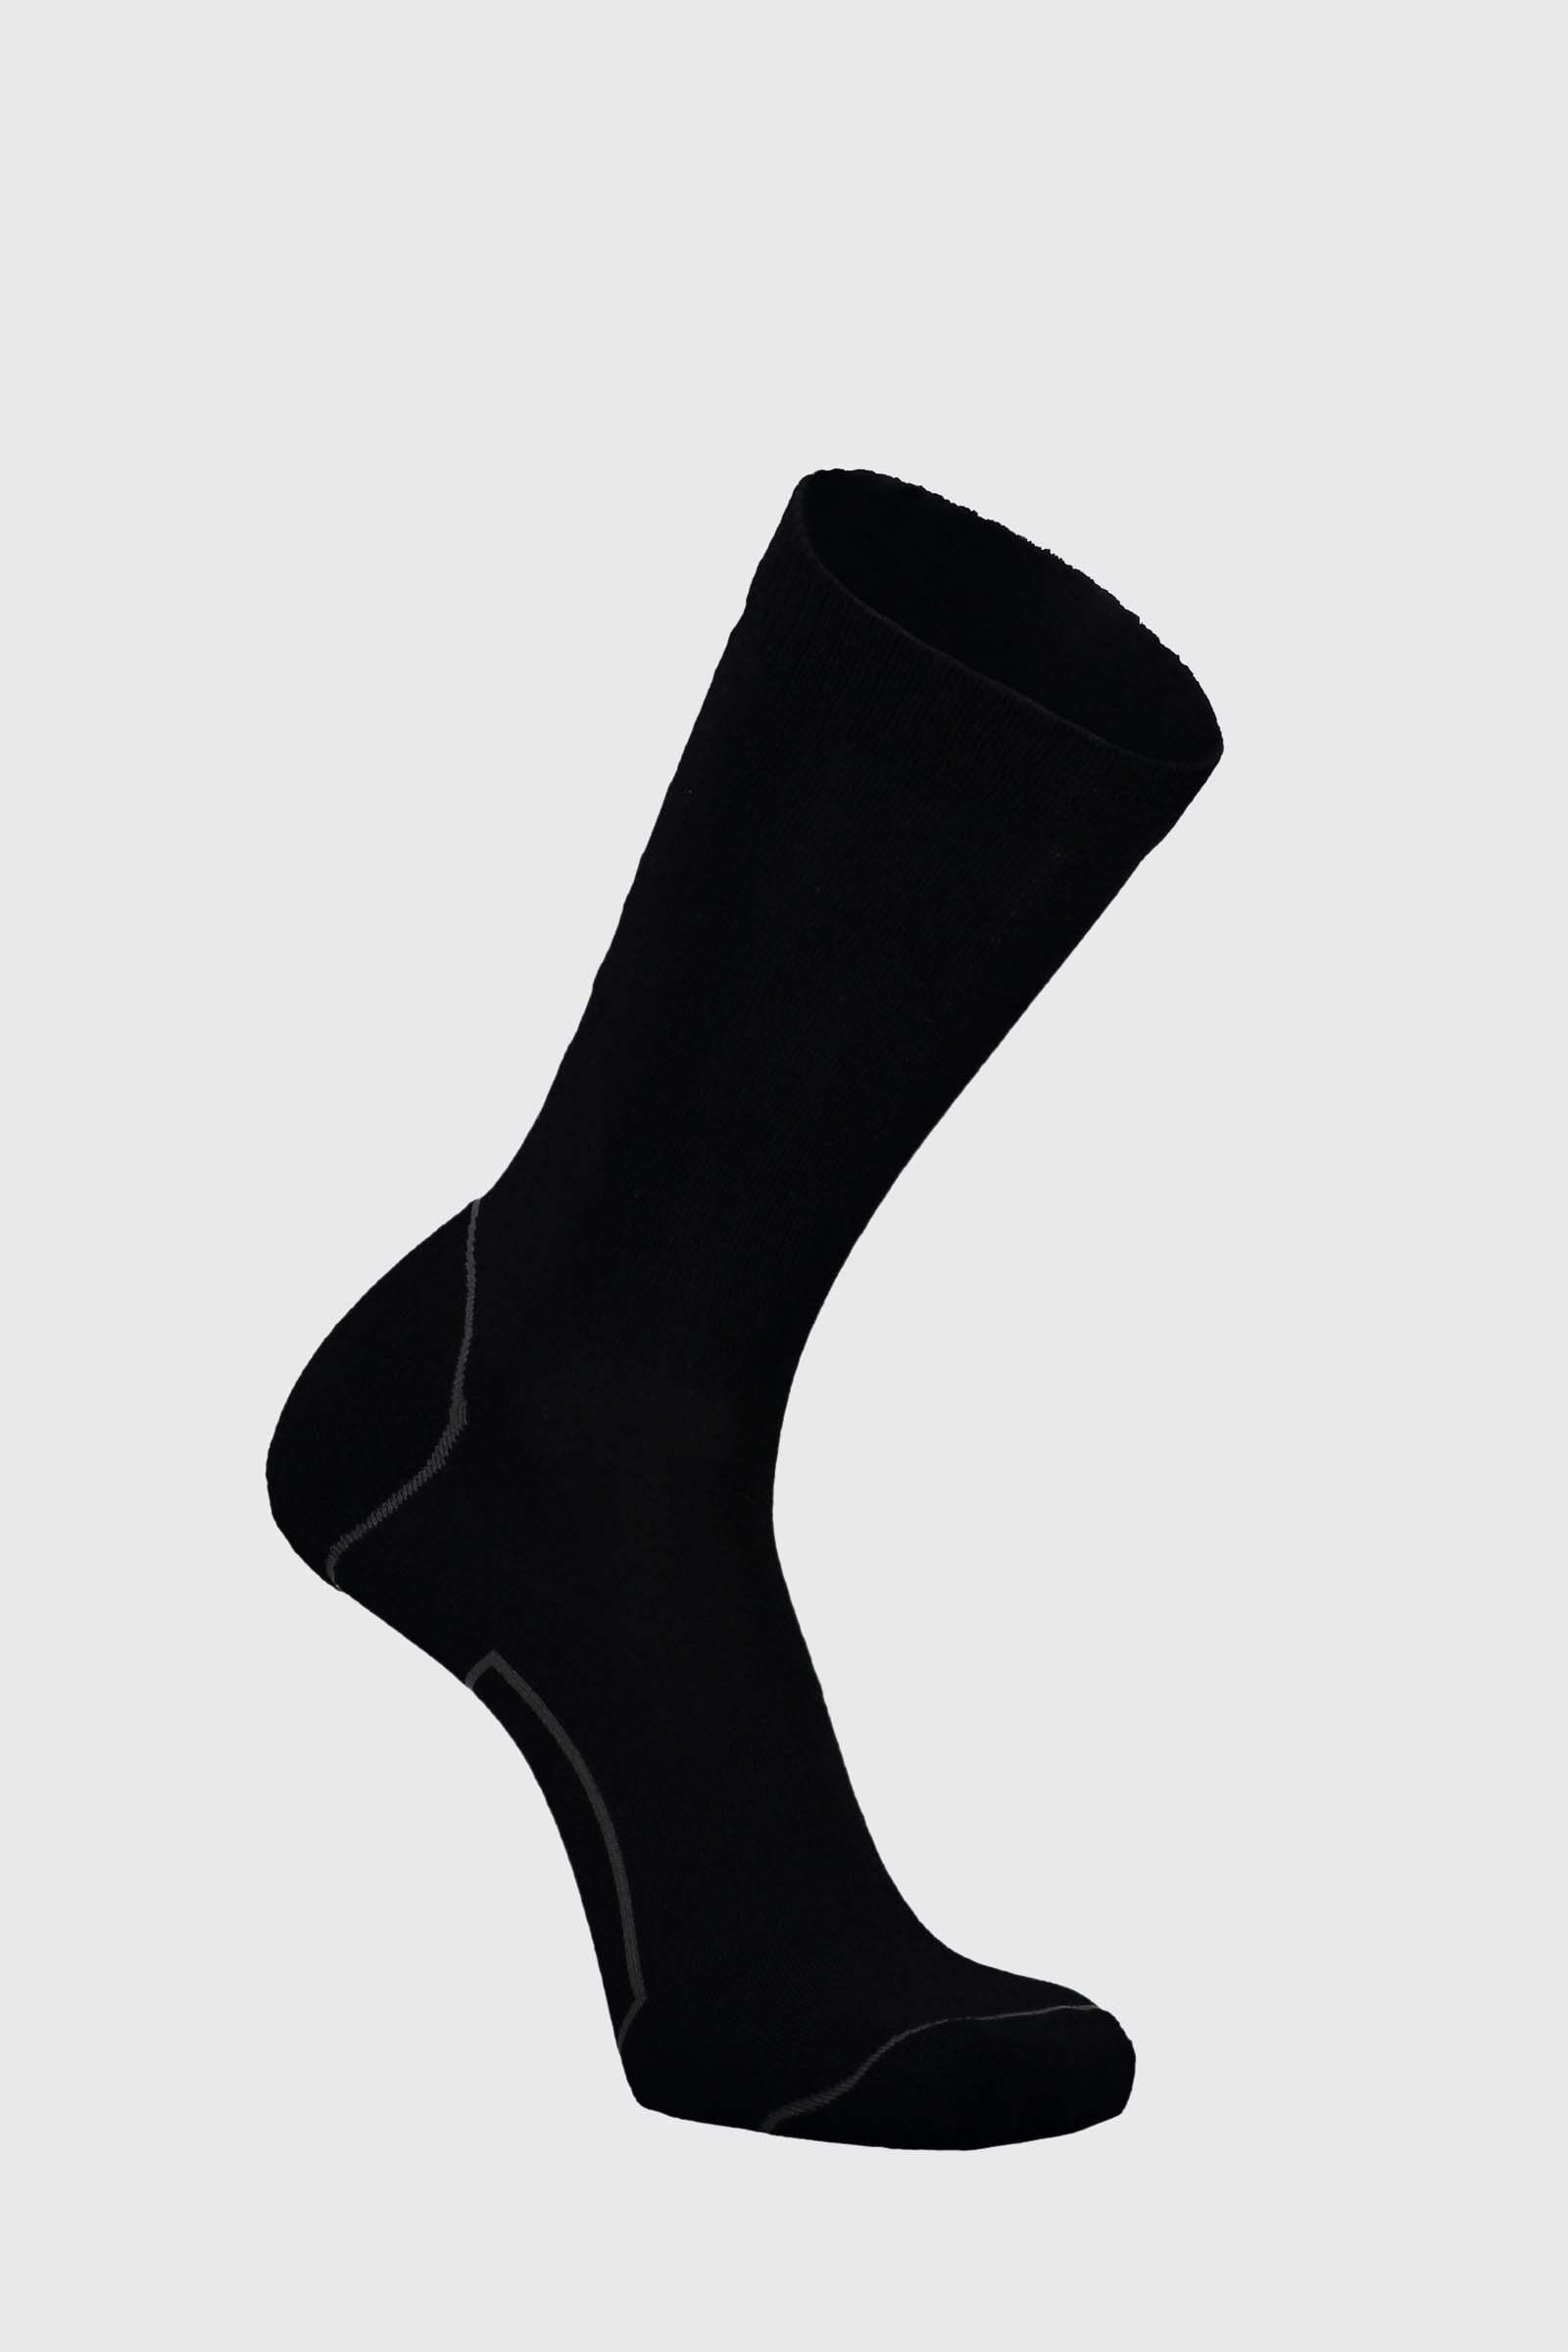 Mons Royale Unisex Tech Bike Sock 2.0 - Merino Wool, Black / 42-44